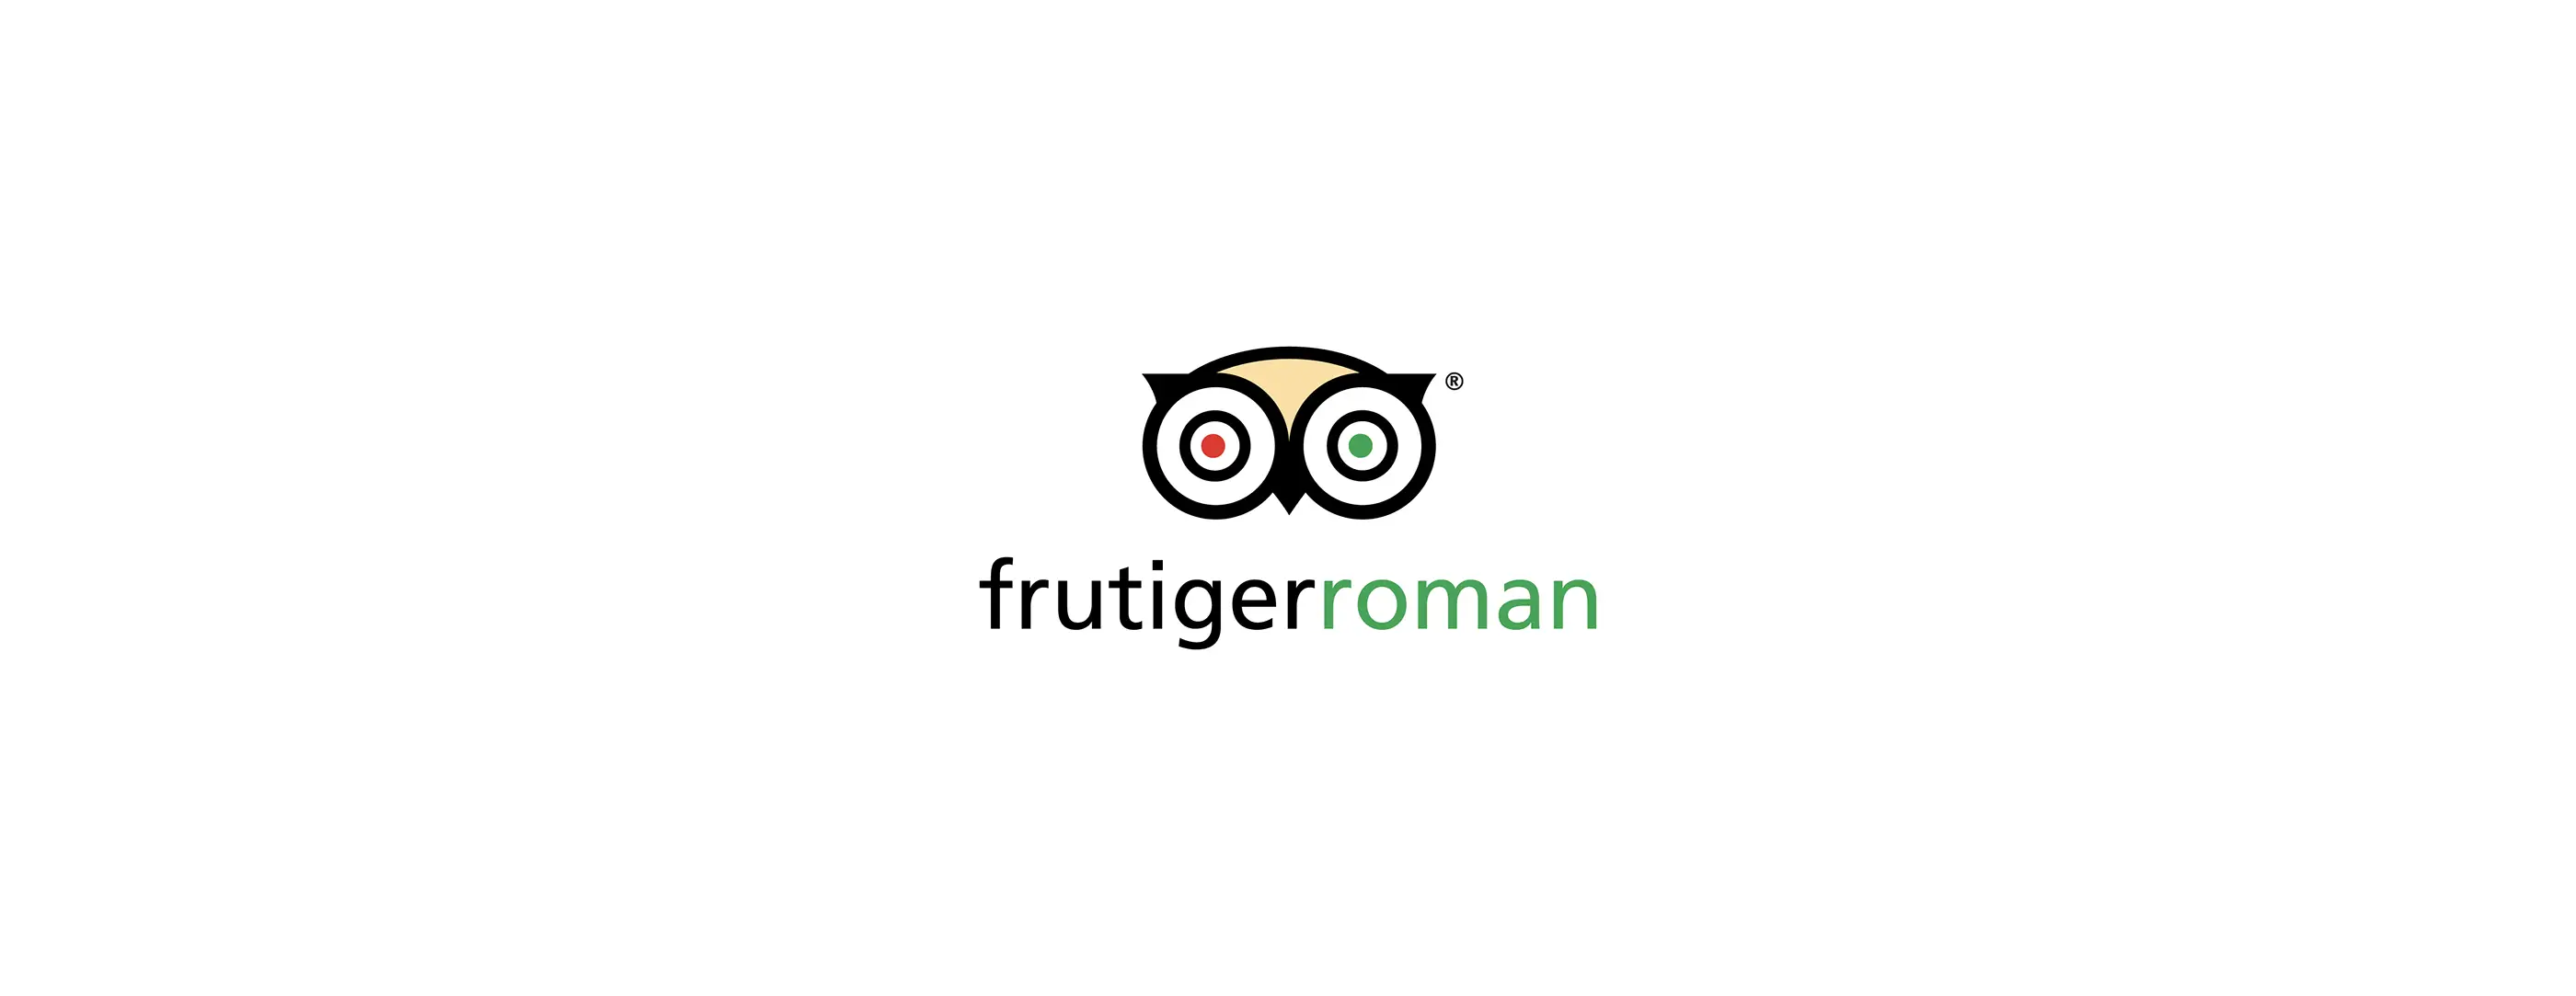 wersm-logo-font-tripadvisor-frutiger-roman